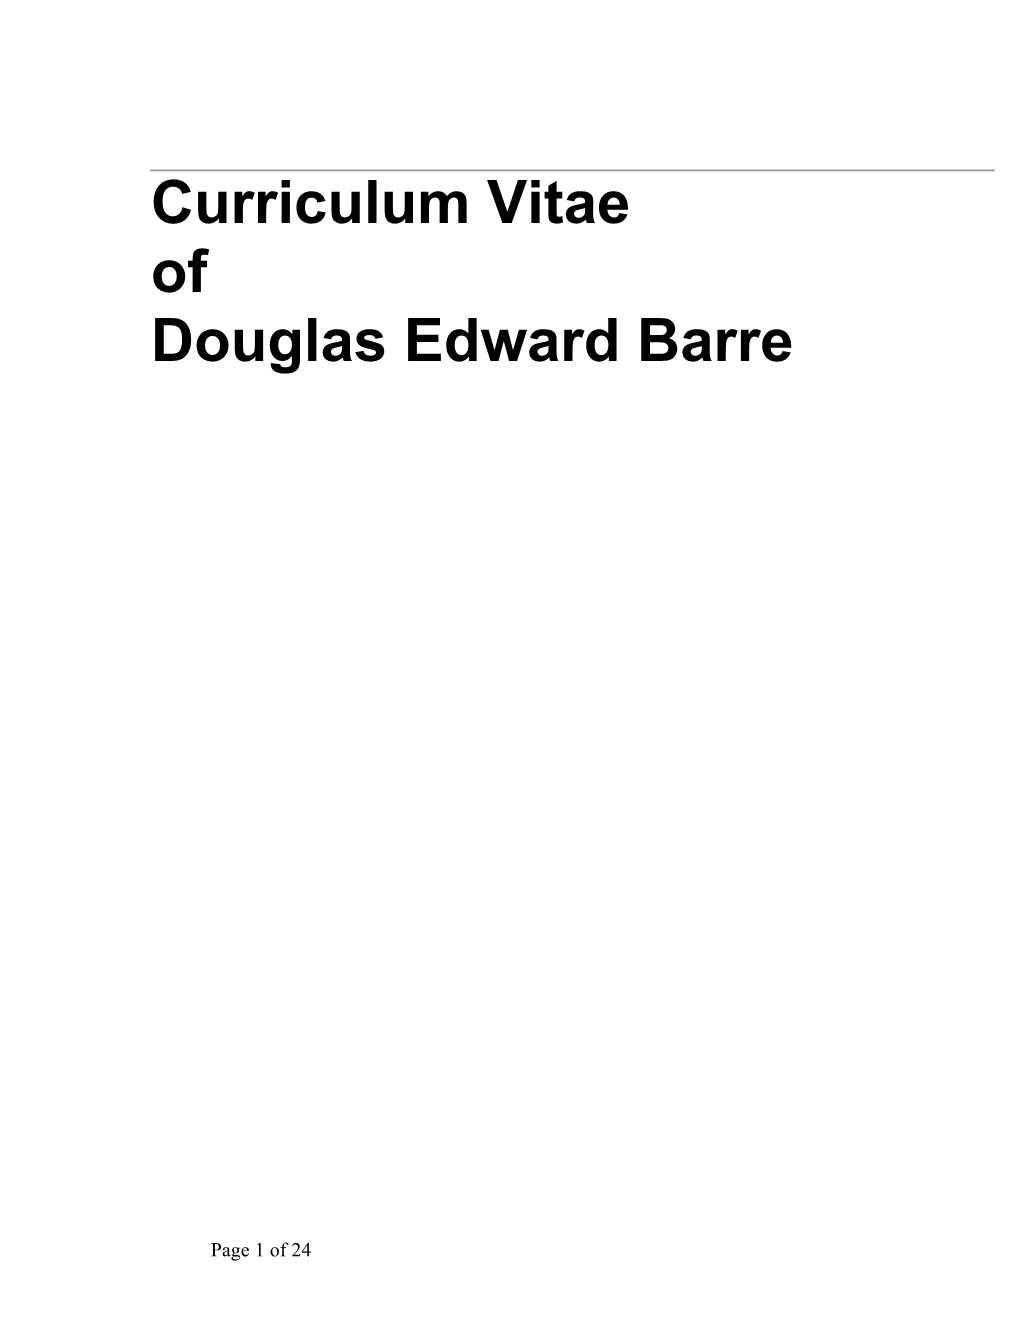 Barre-Curriculum Vitae-1 July 2011